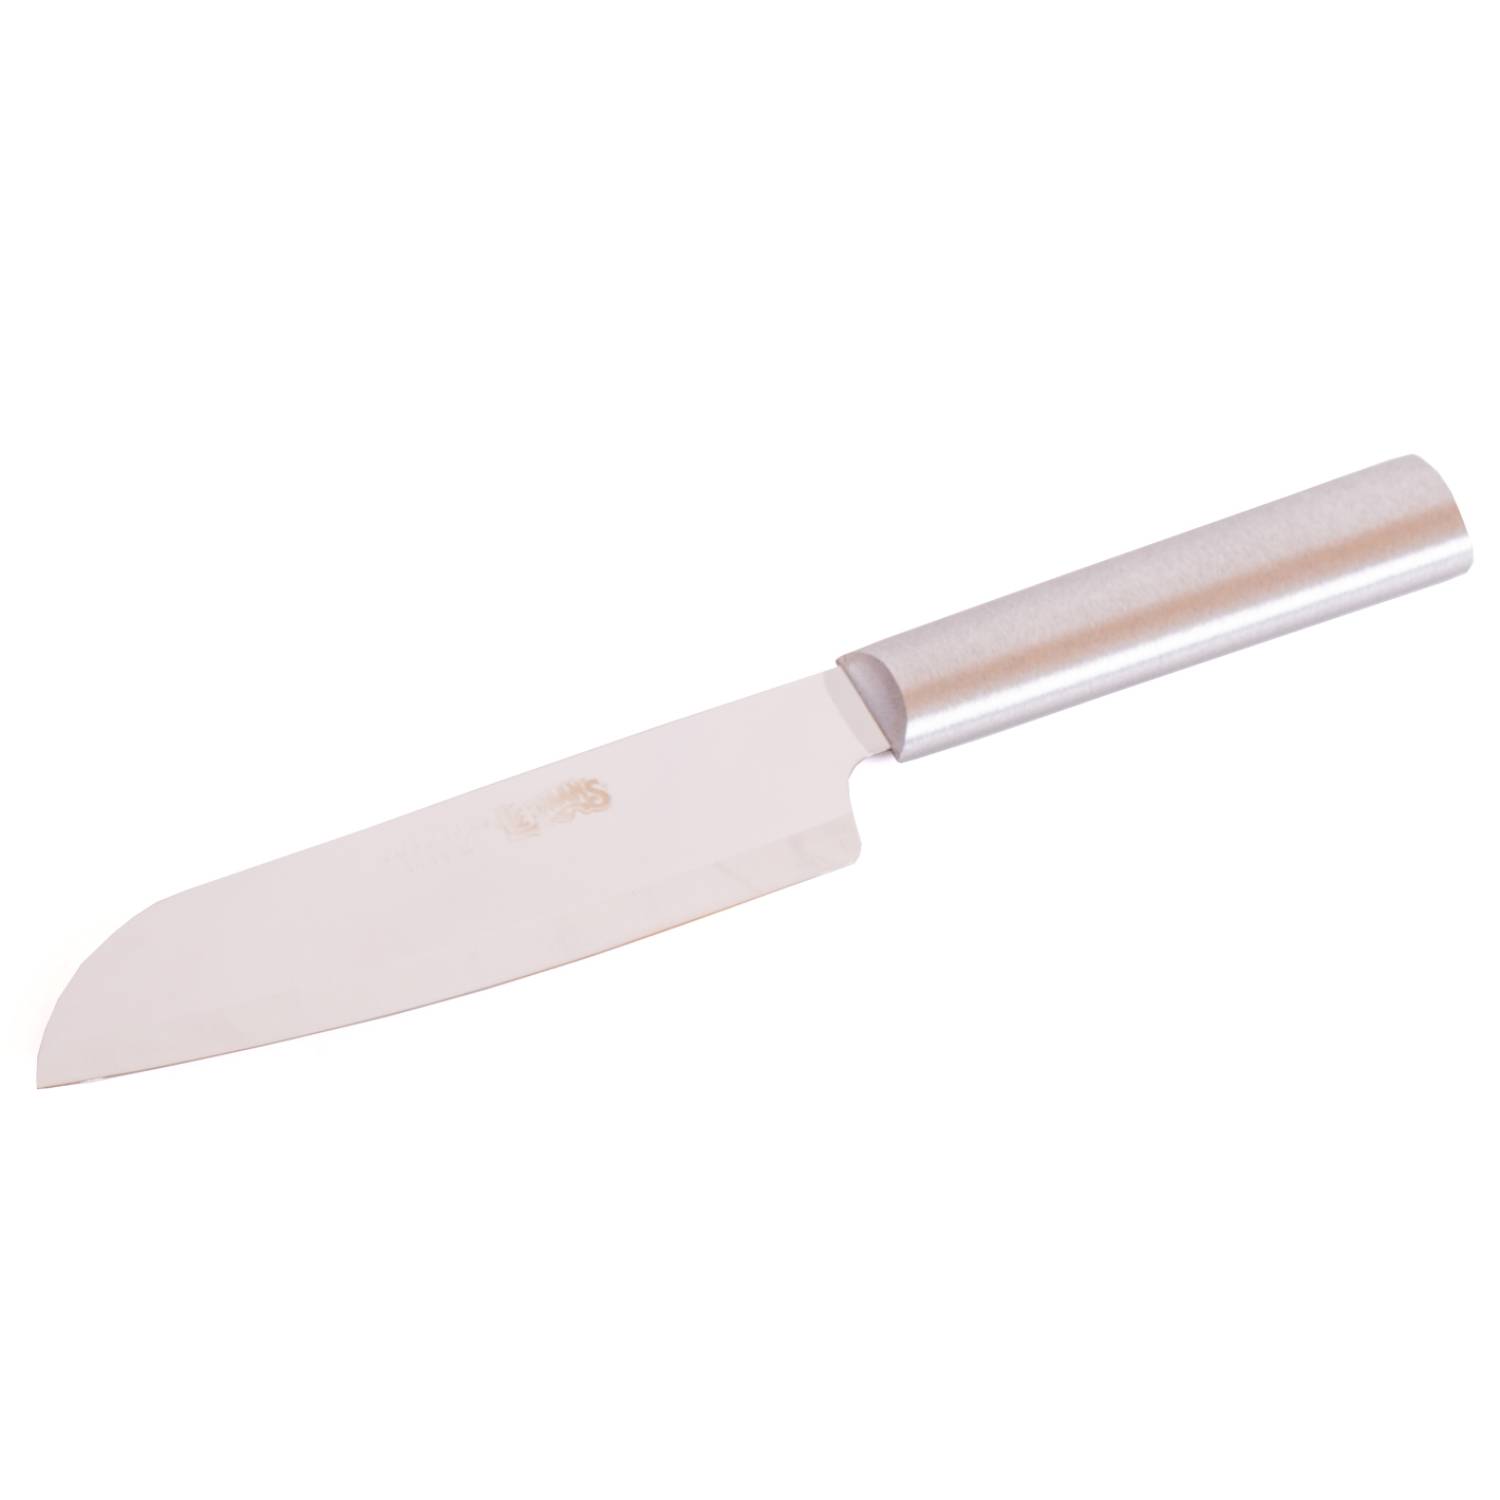 Rada Cutlery Quick Edge Knife Sharpener - 100% USA Made 